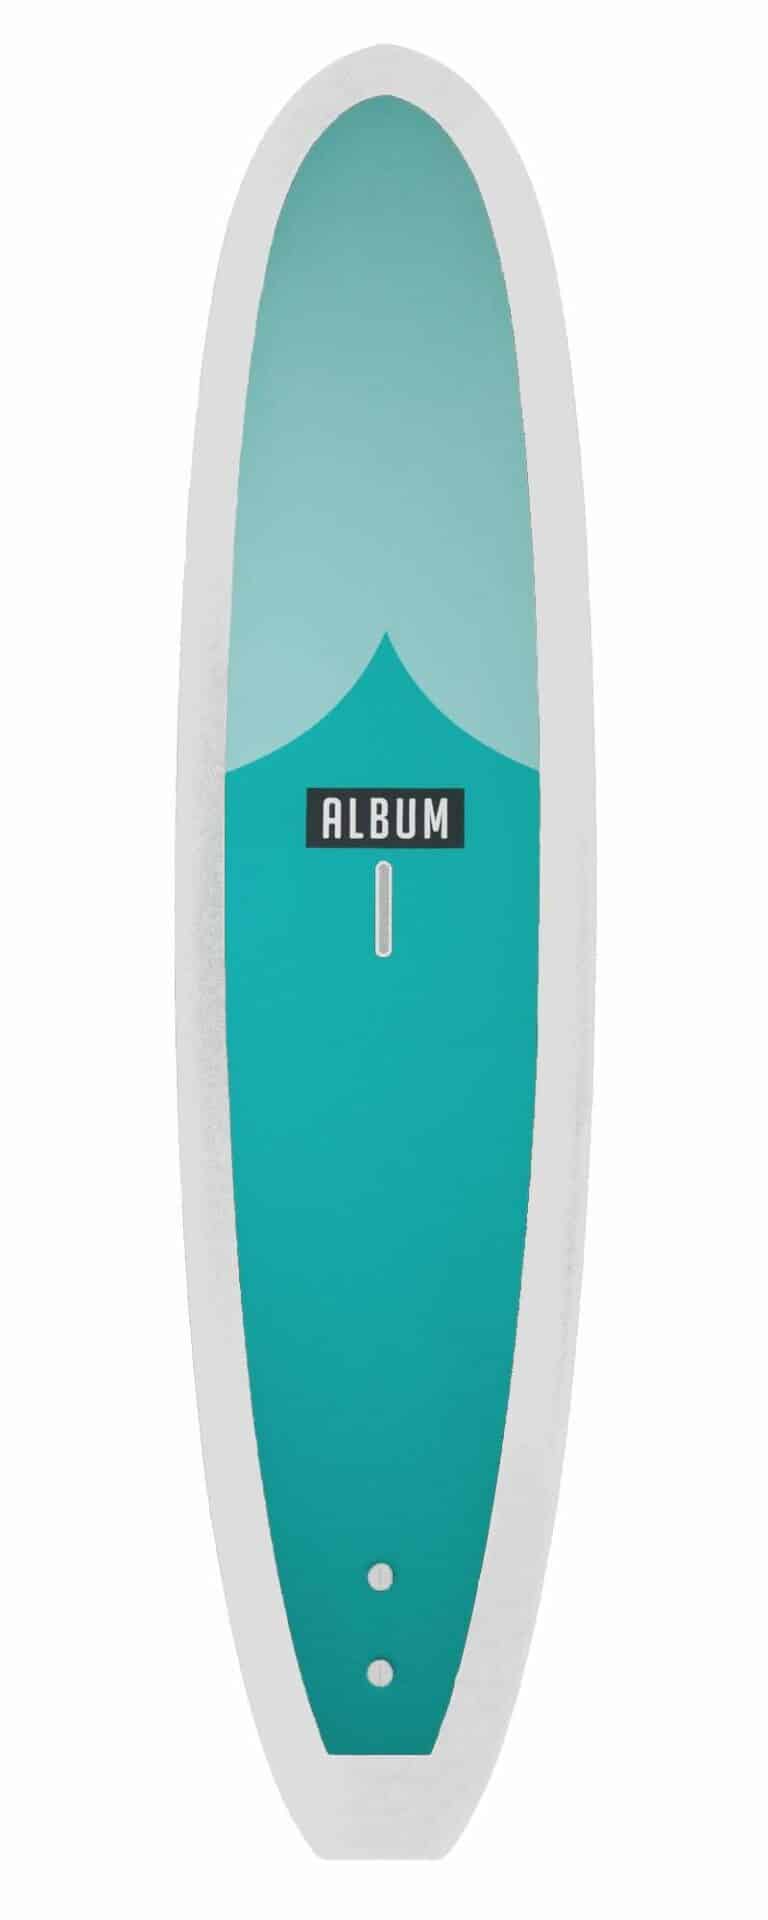 Album Surfboards Soft Top Range - | GetFoamie.com